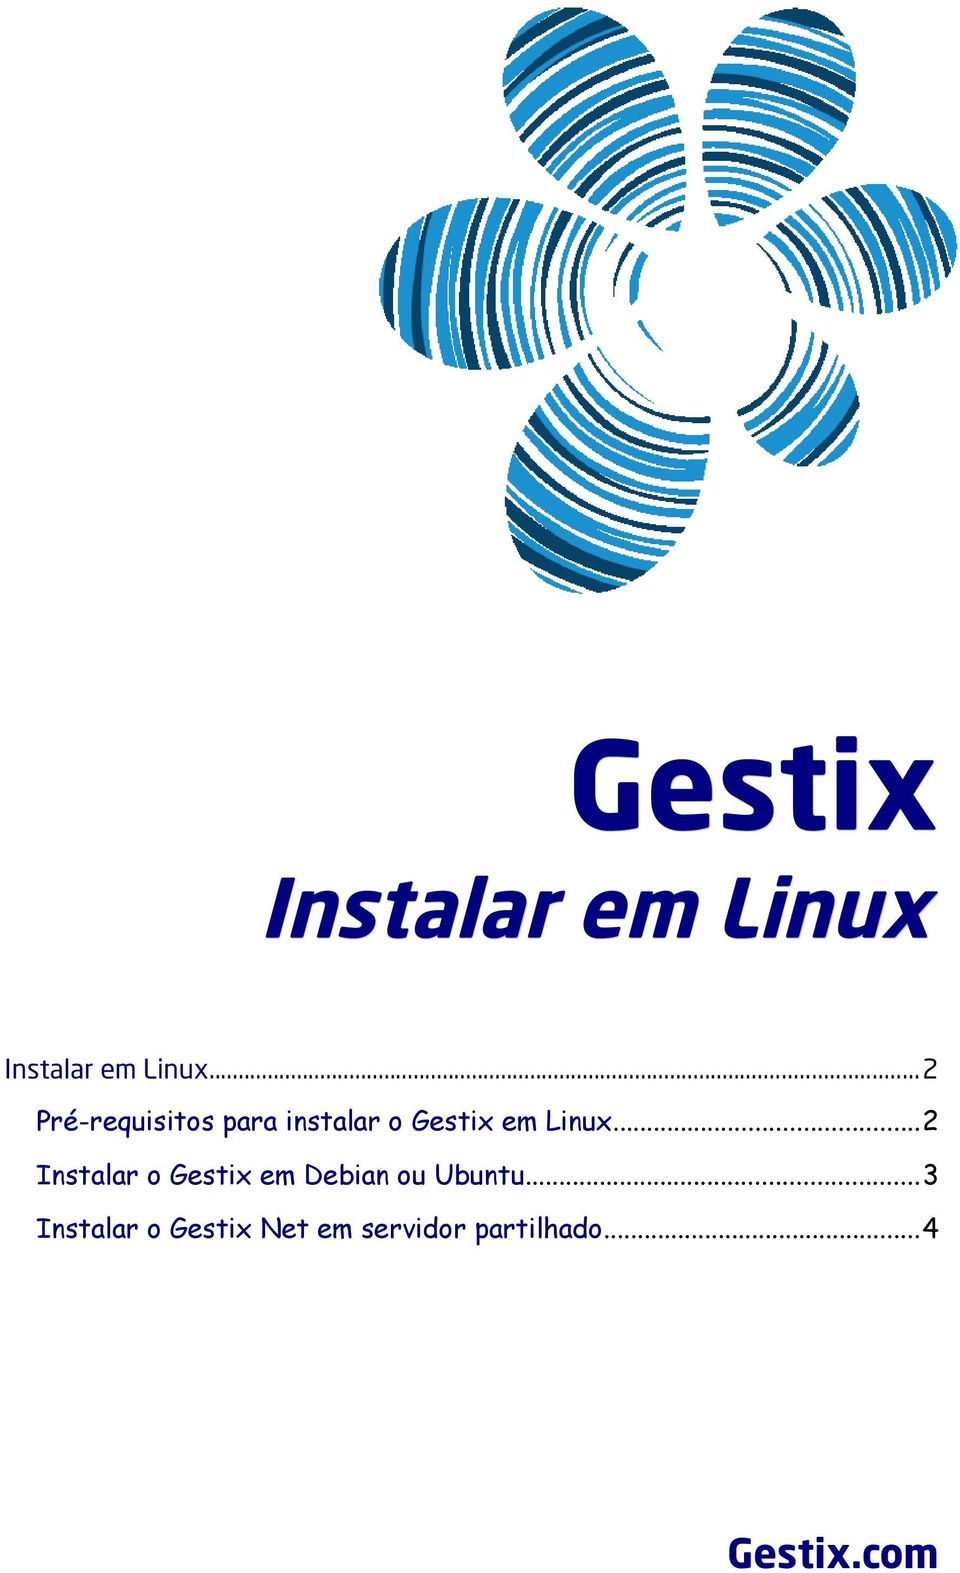 ..2 Instalar o Gestix em Debian ou Ubuntu.